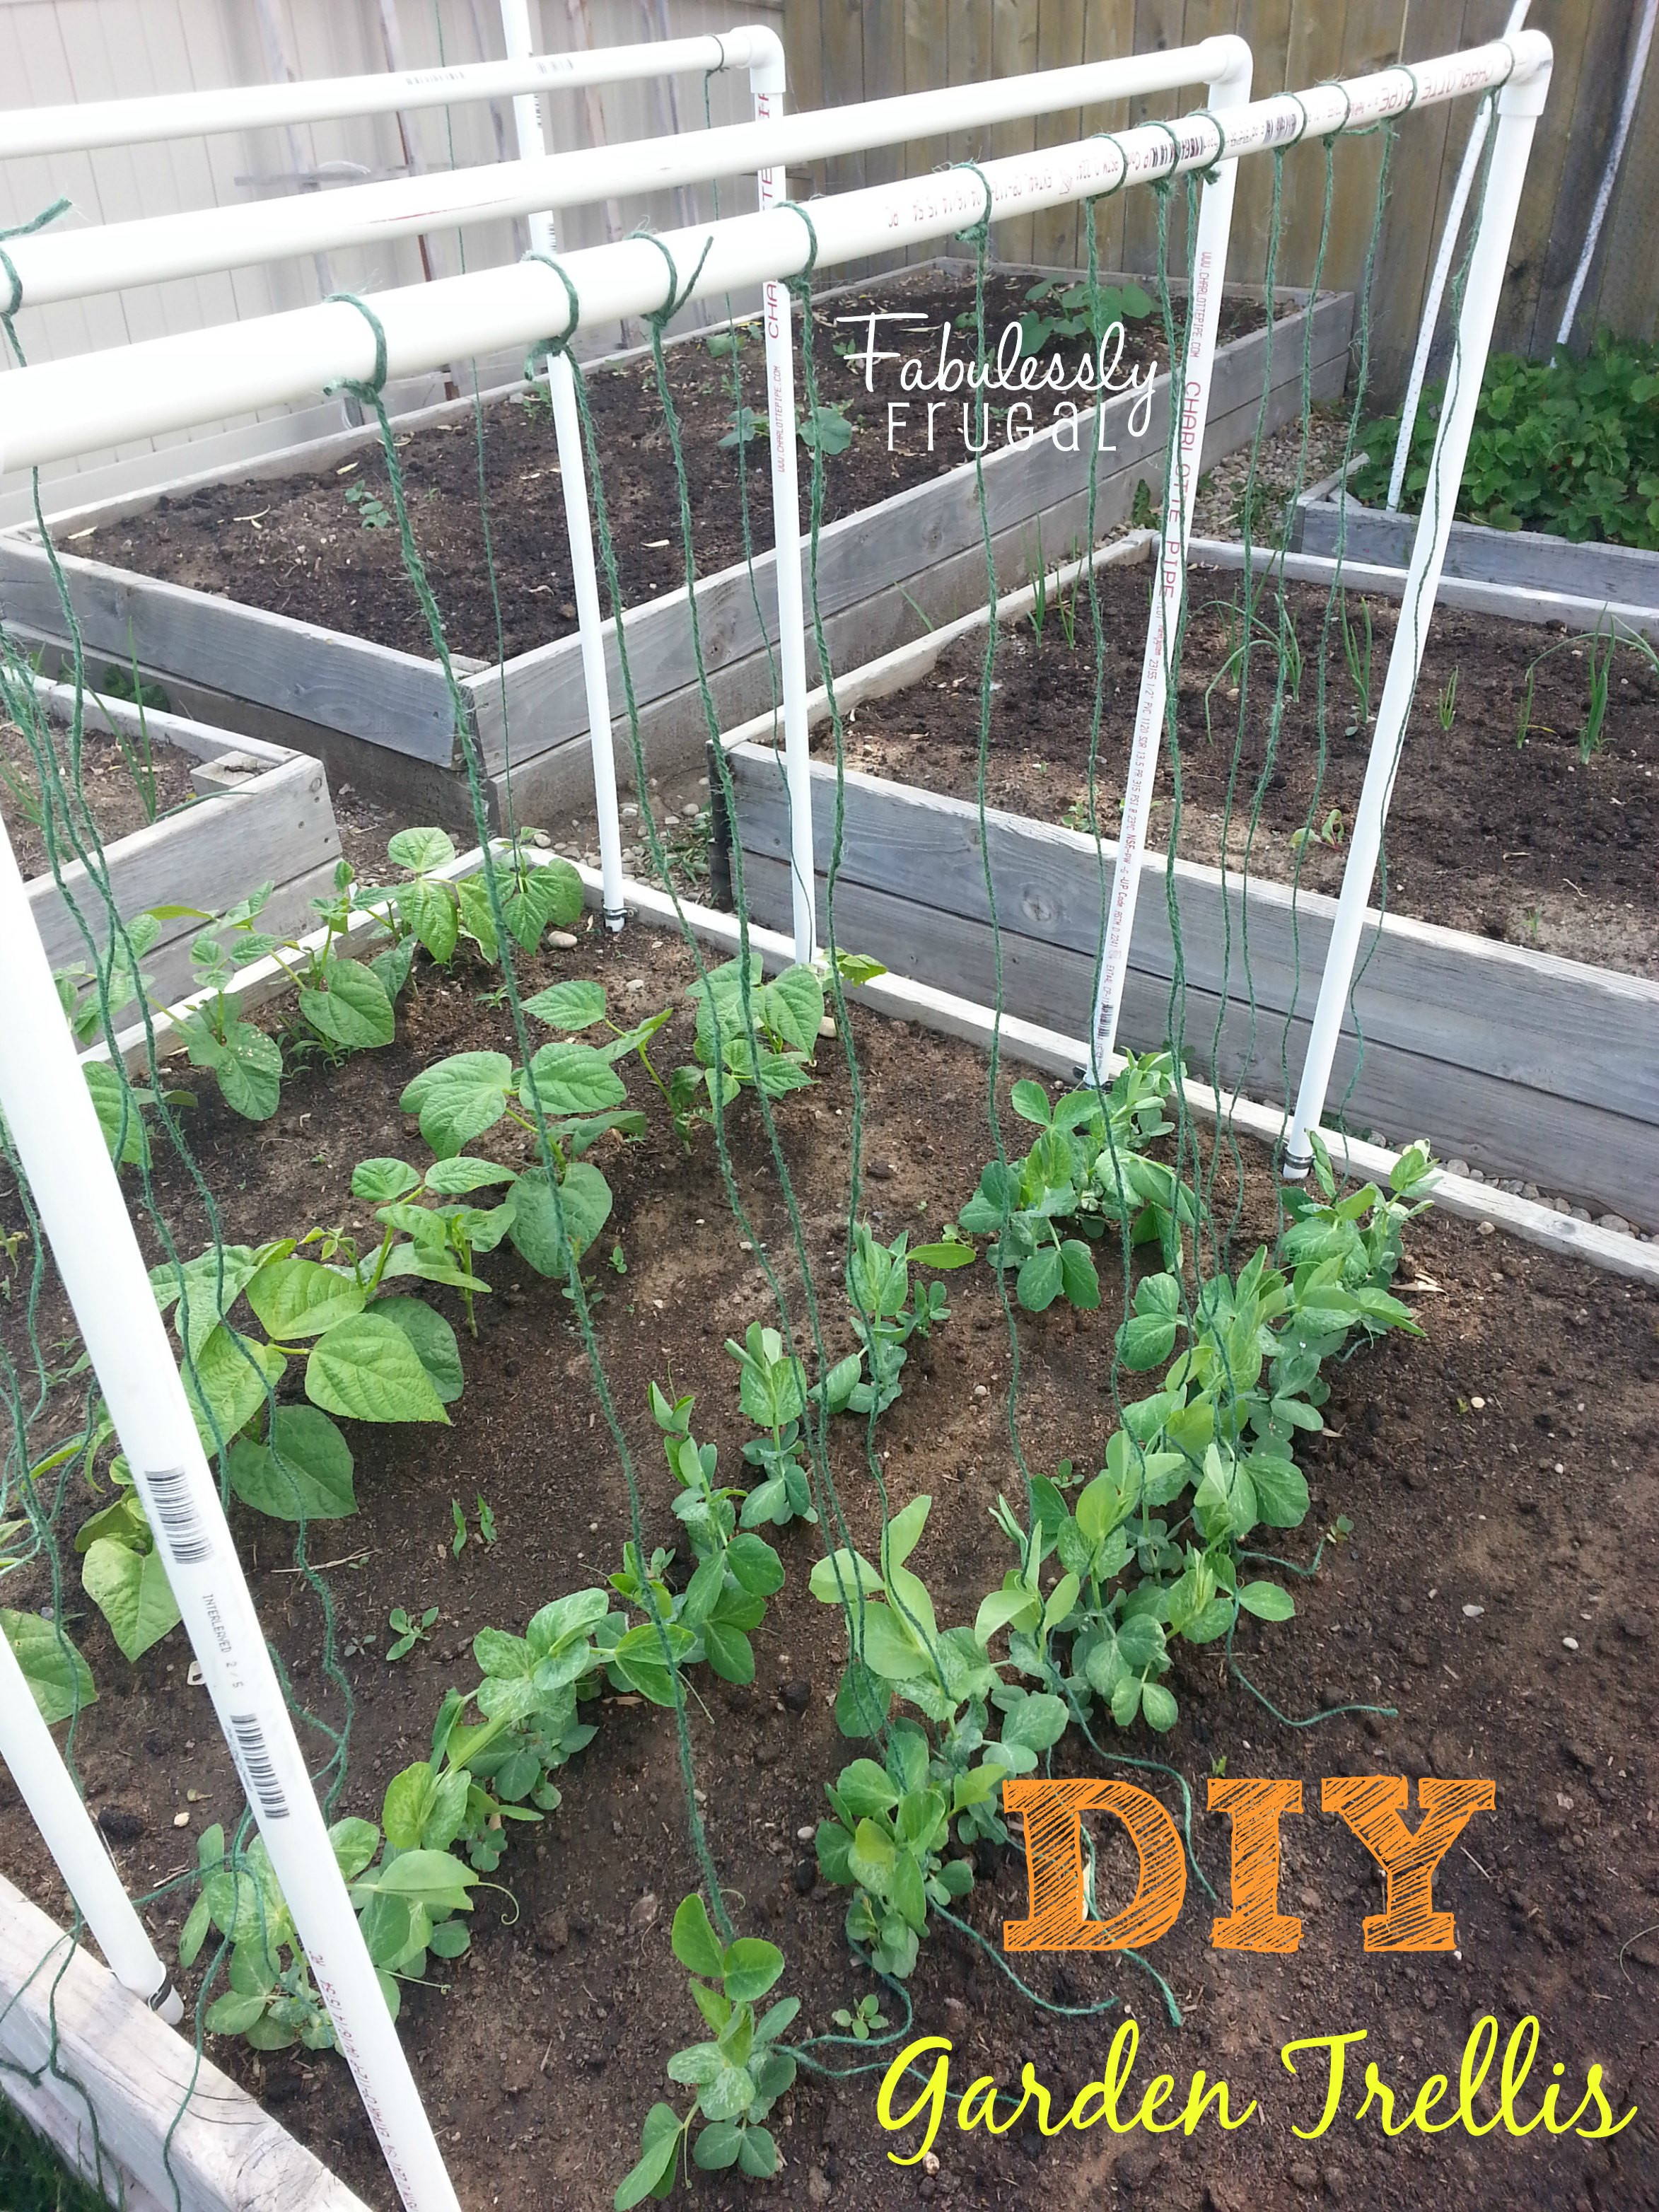 Best ideas about DIY Garden Trellis
. Save or Pin DIY Garden Trellis Now.